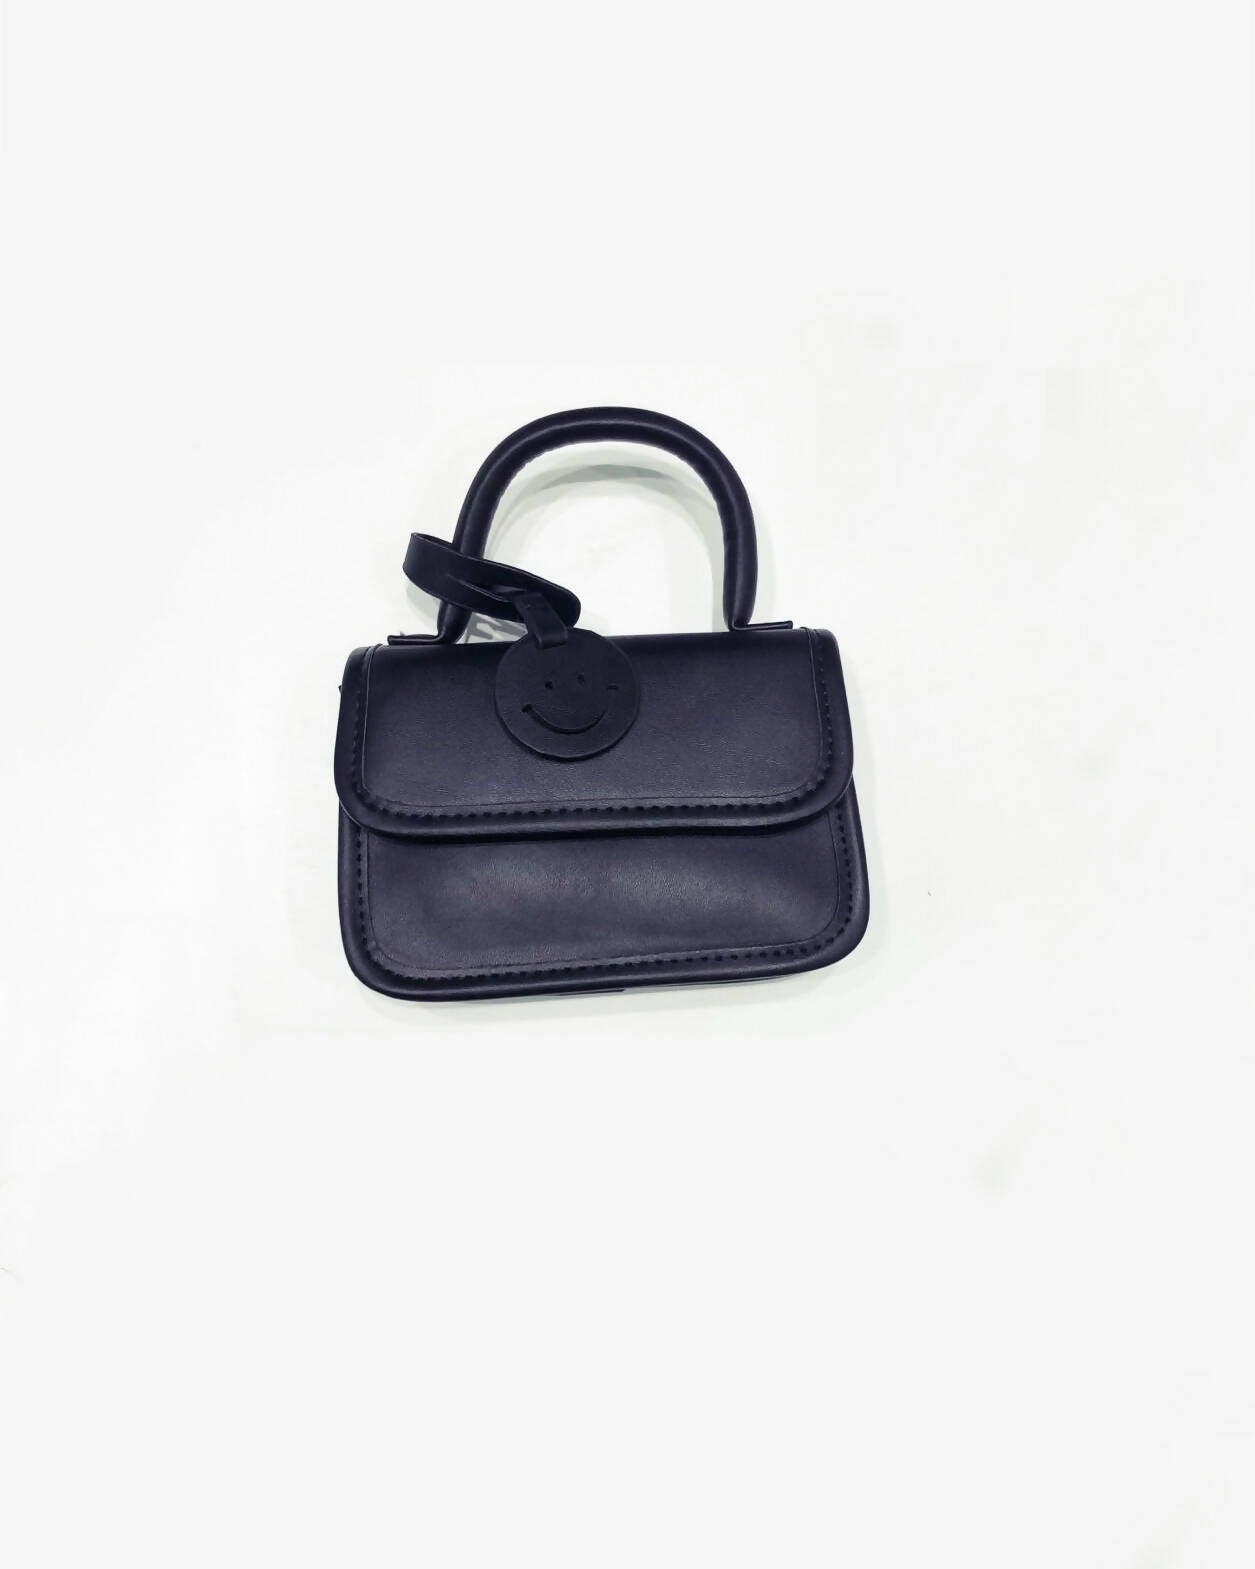 Slaks World Fashion Small Size Muff Handbag - Black